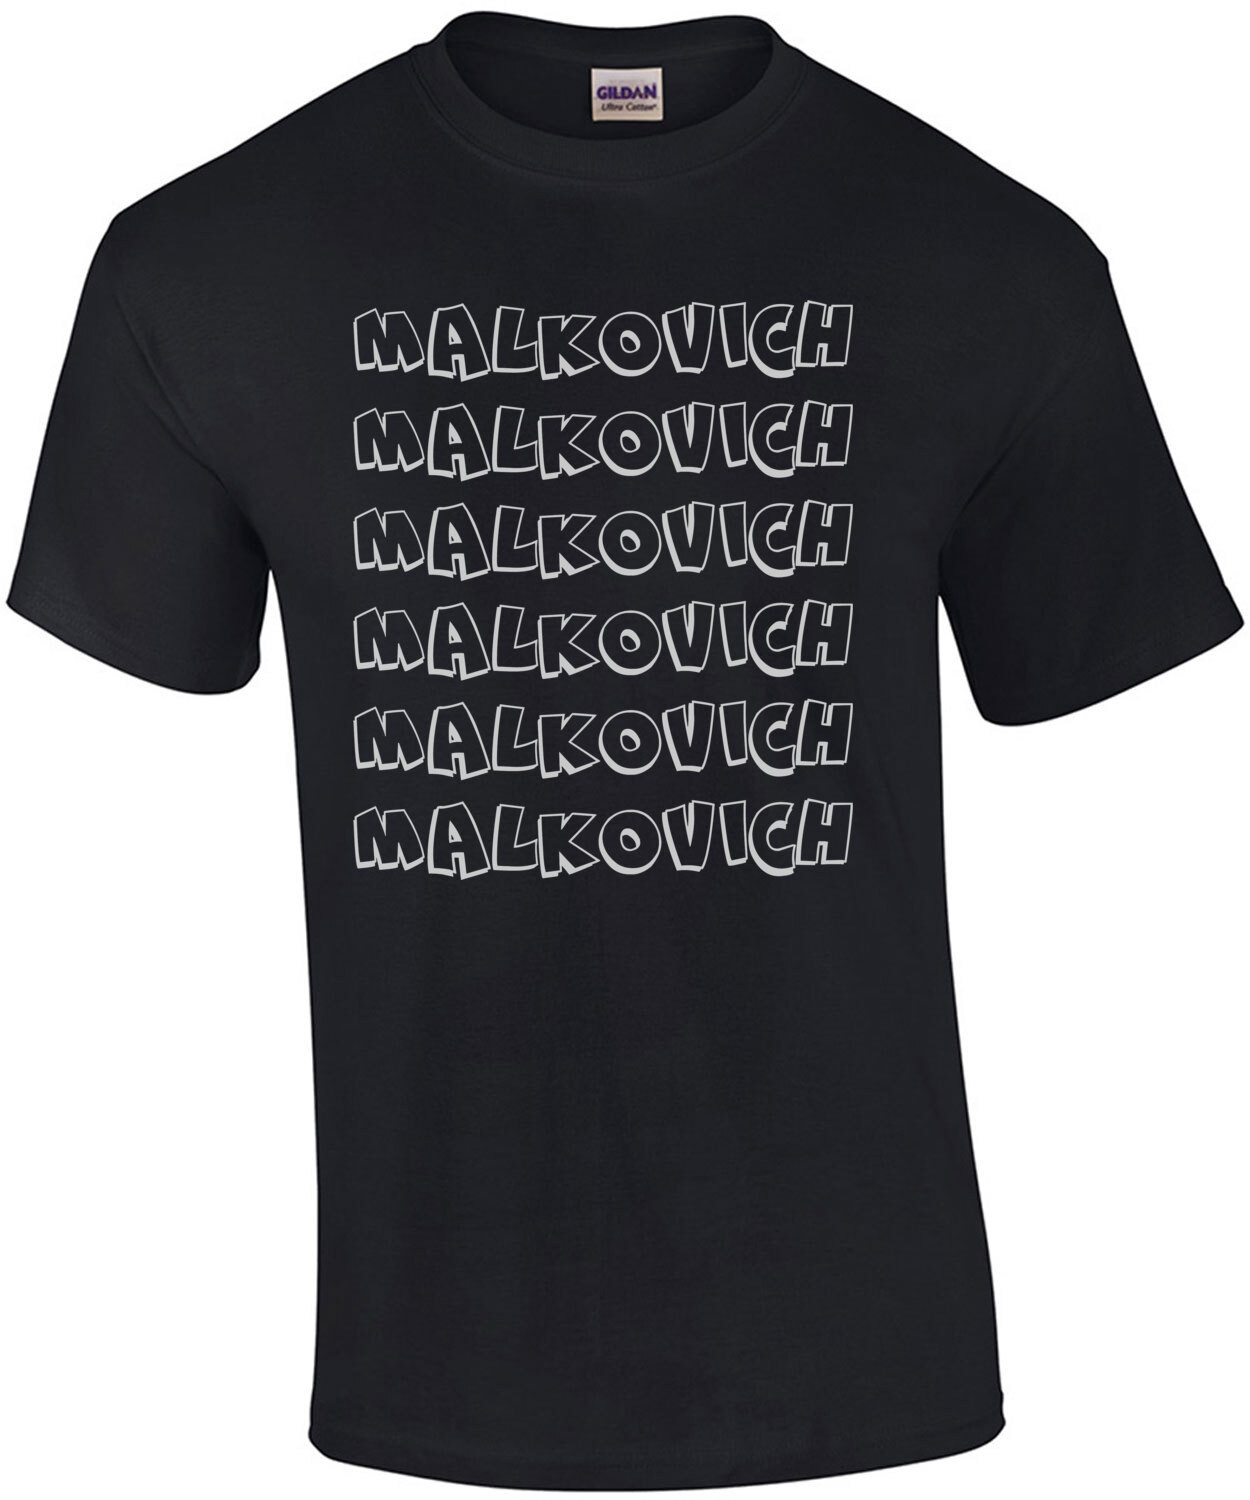 Being John Malkovich - 90's T-Shirt